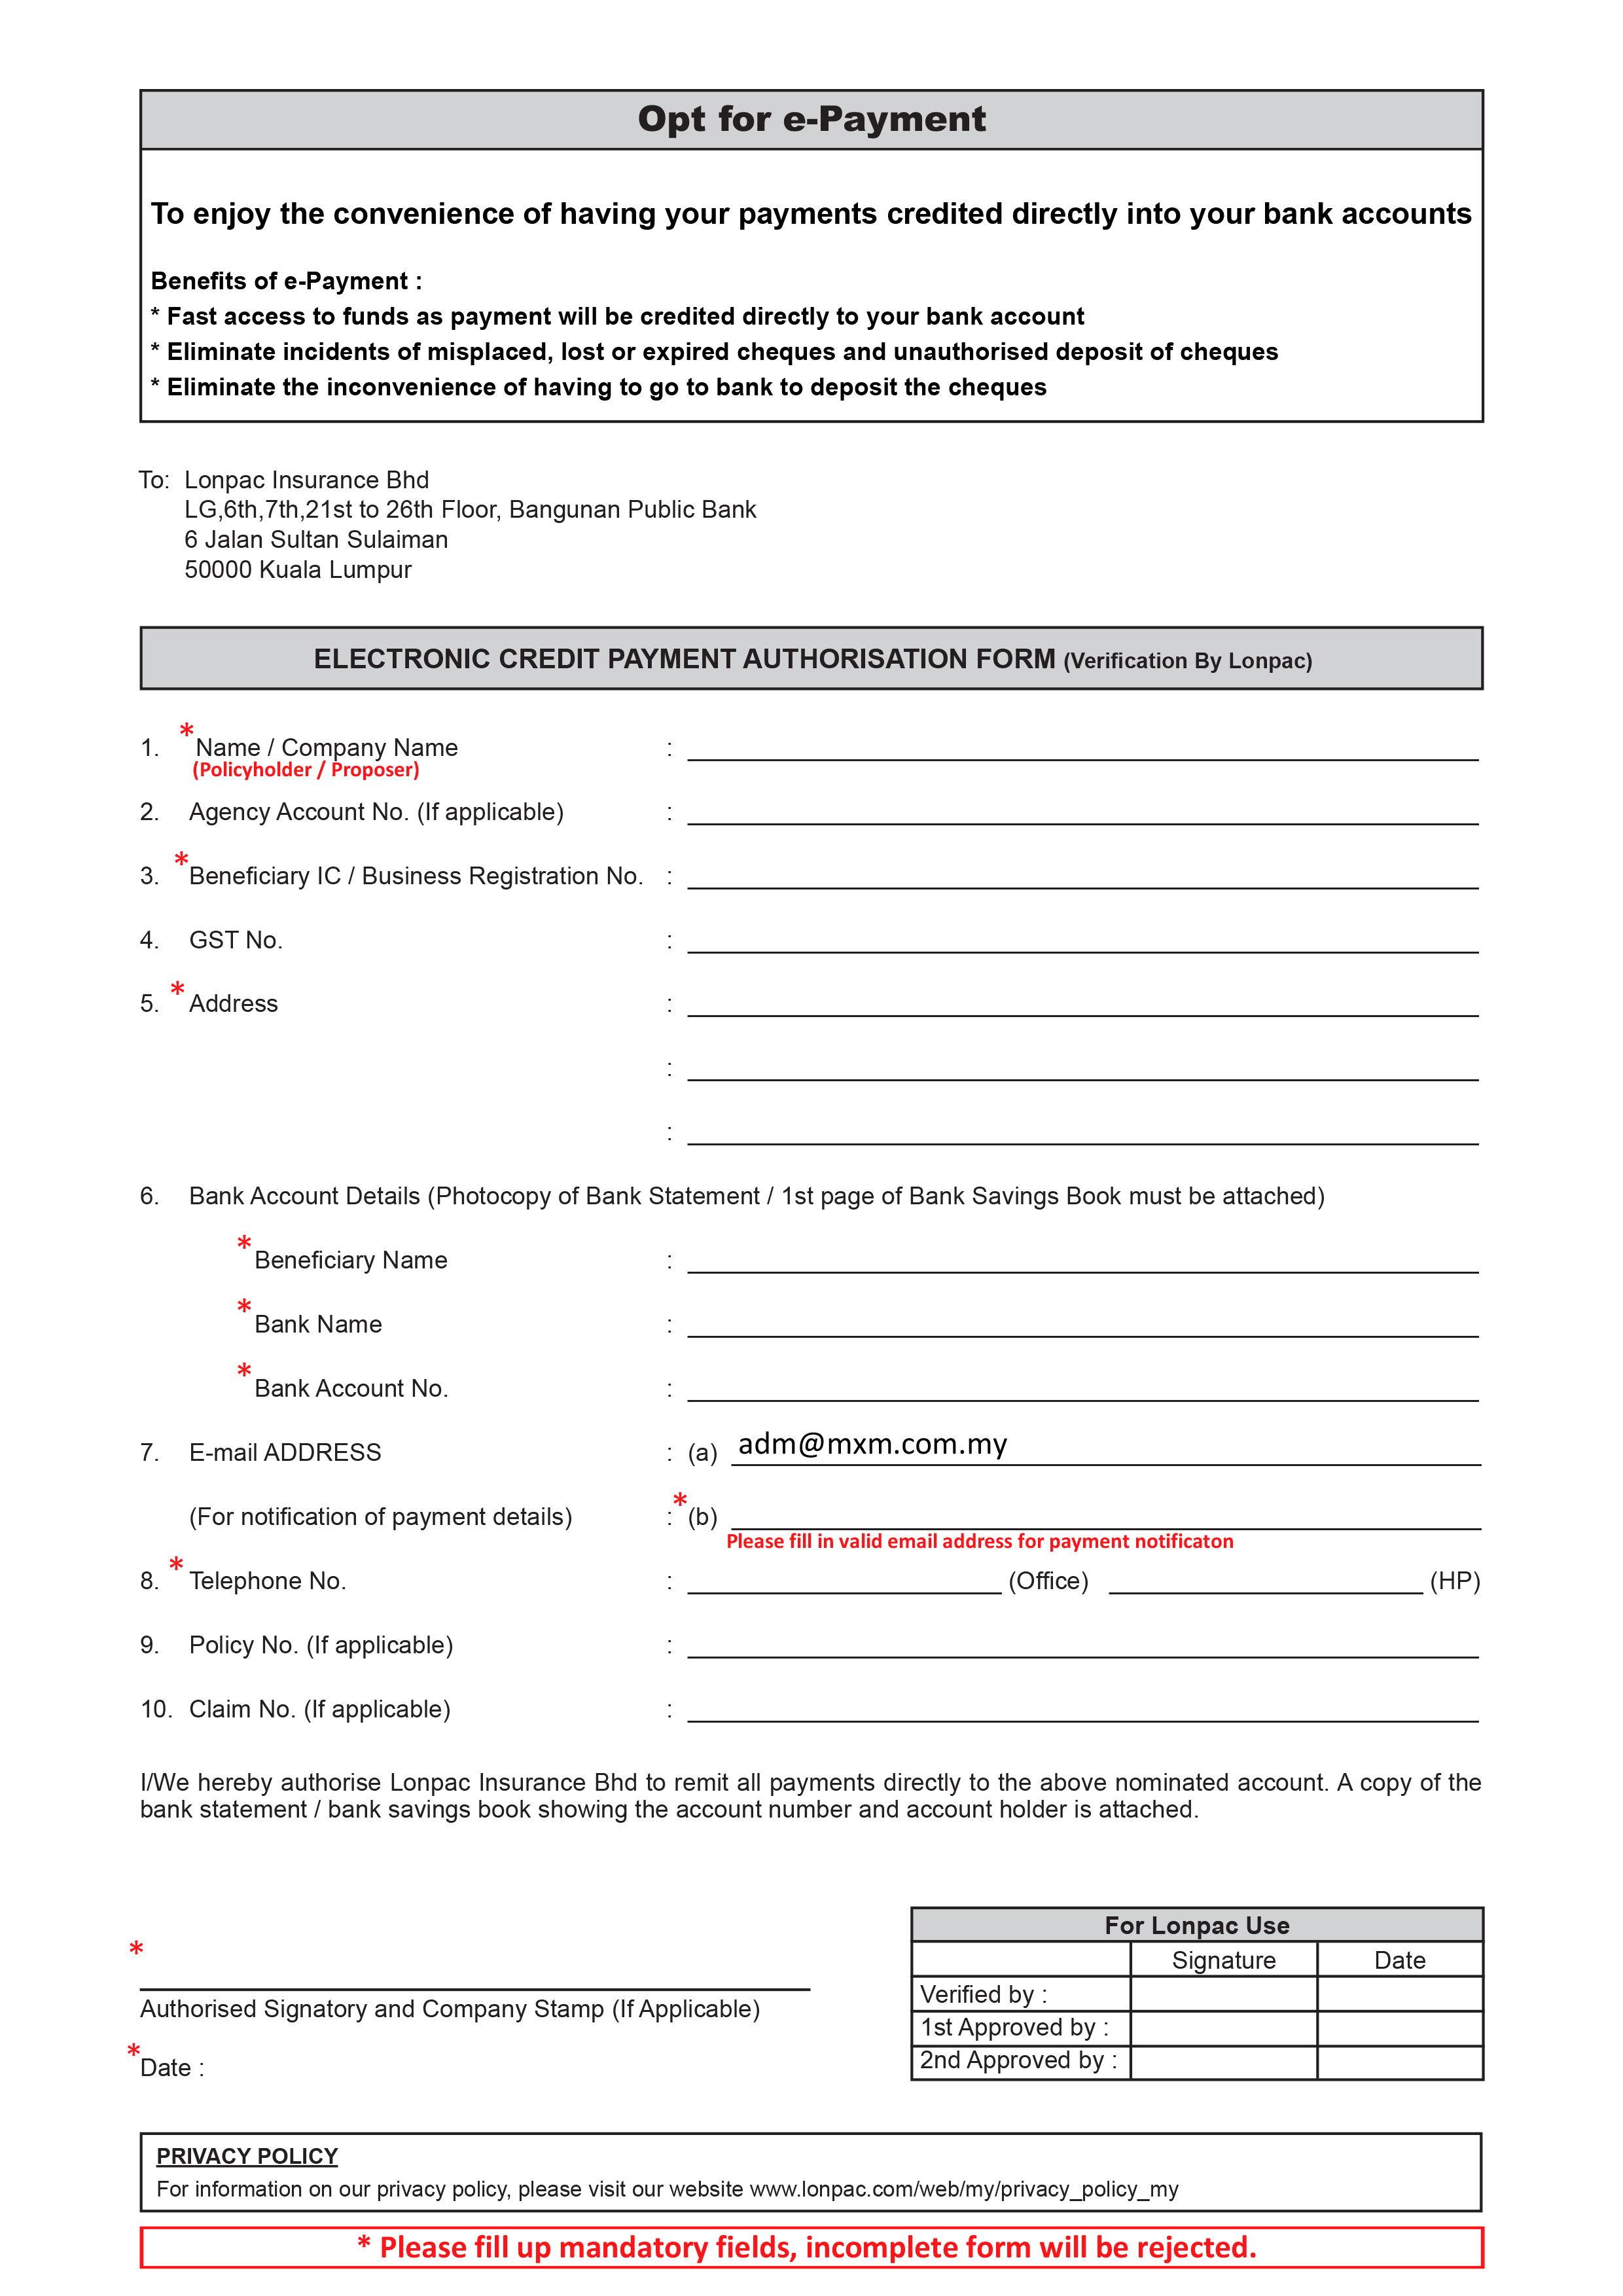 LonPac E-payment form